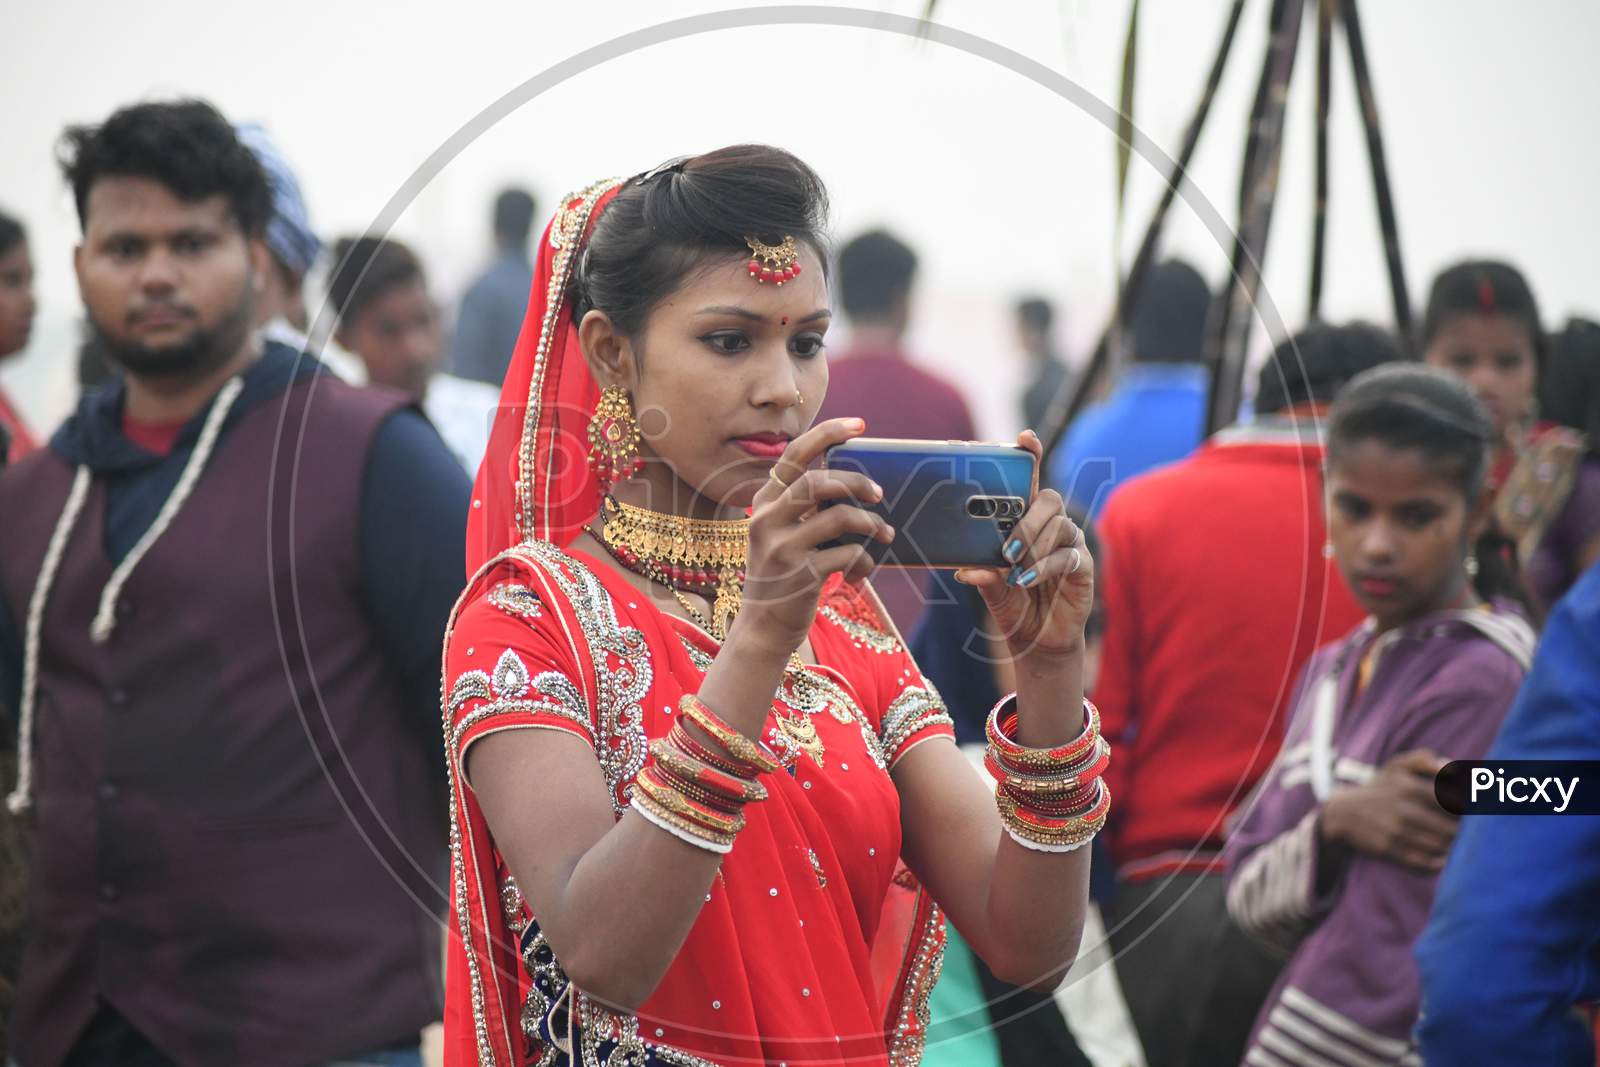 Bodhgaya 21 nov 2020- Hindu Devotees click selfie during Chhatth Festival in Bodhgaya on Saturday.photo/ sanjay kumar (Bodhgaya)